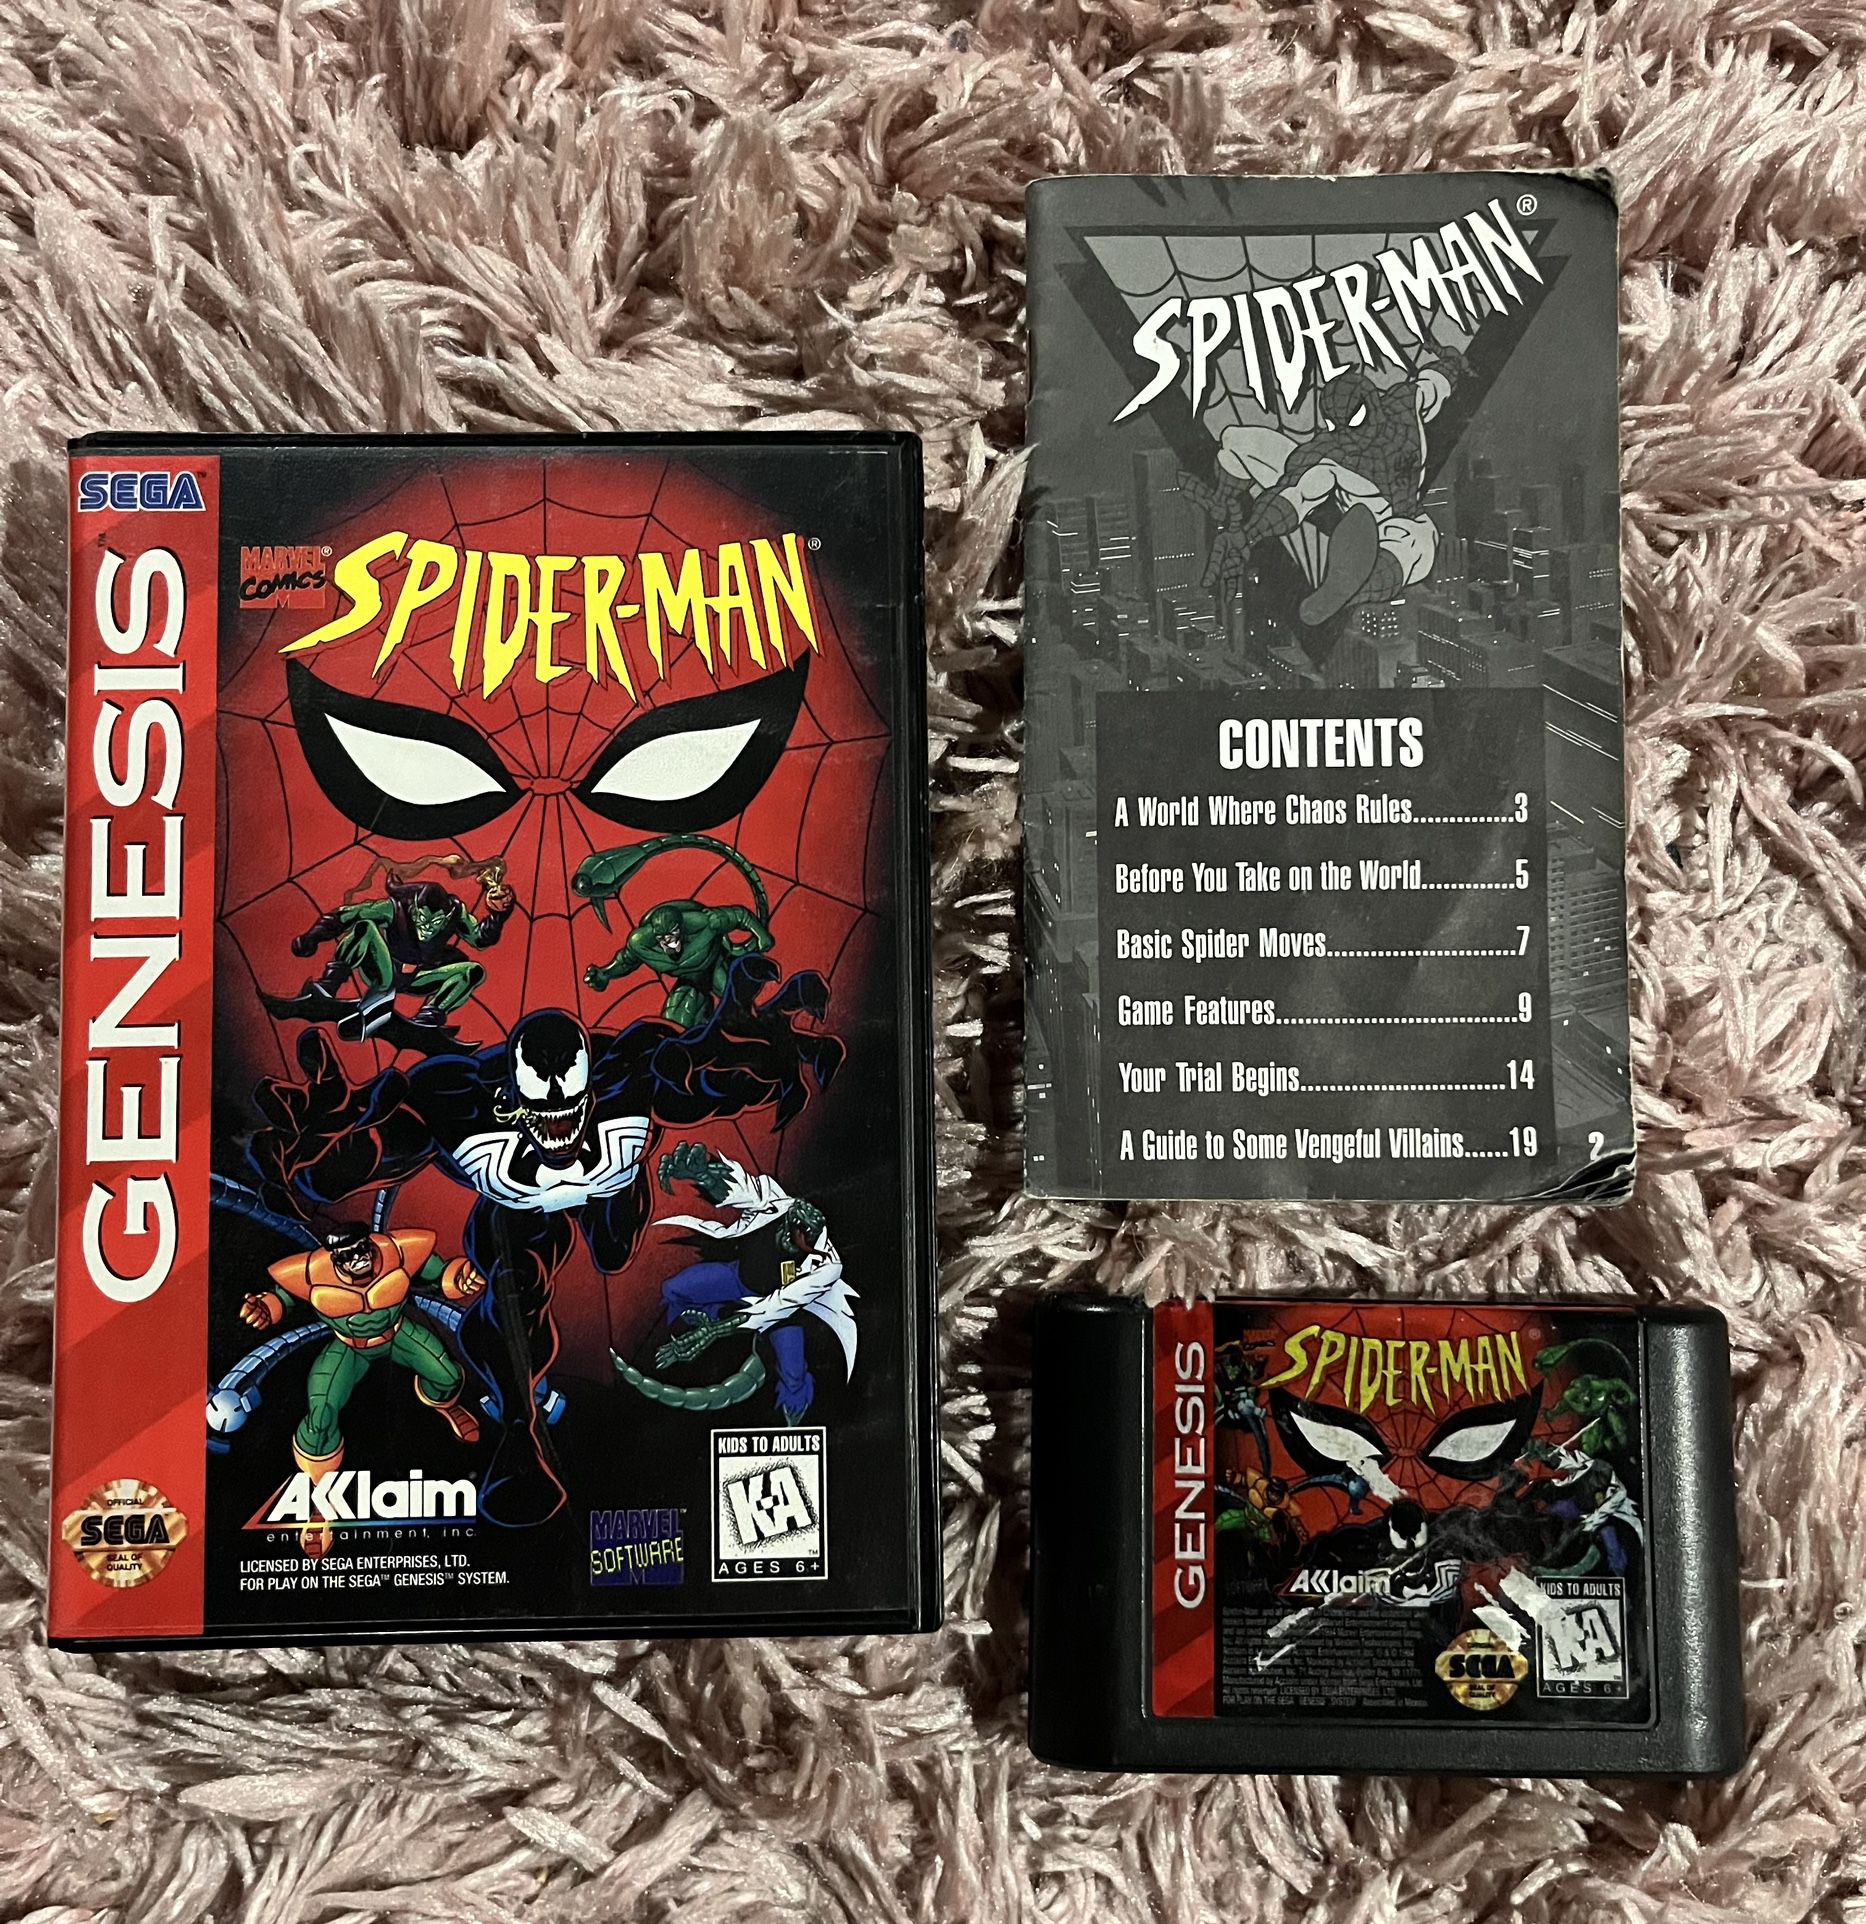 Spider-Man CIB For Sega Genesis 